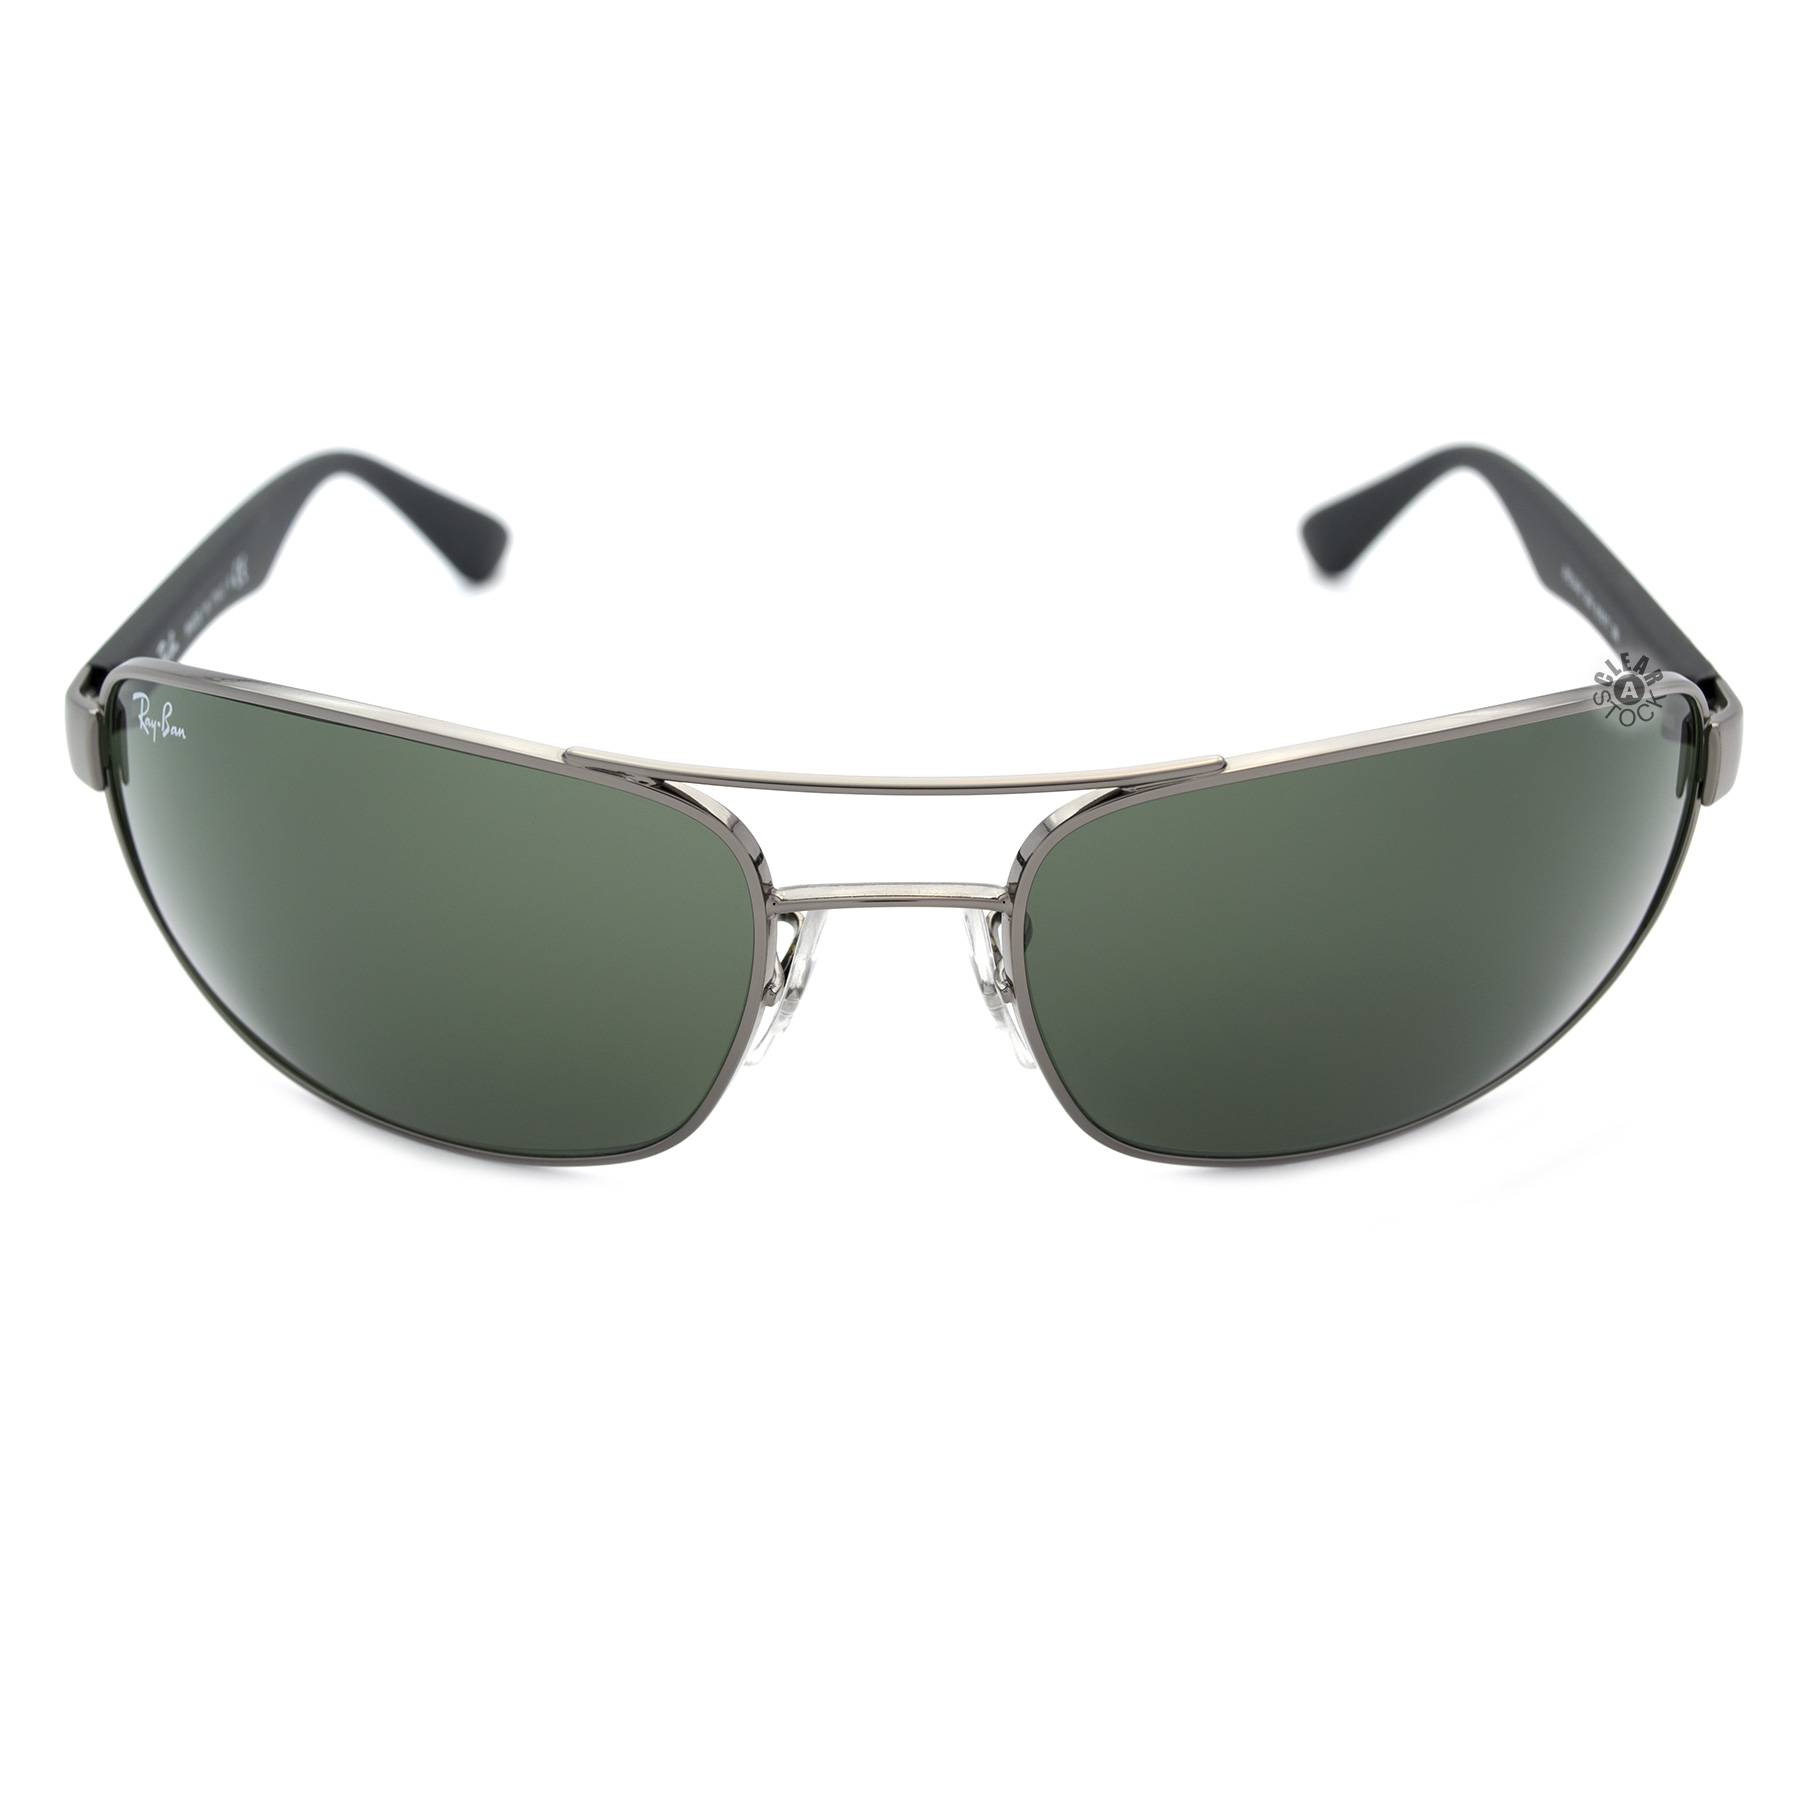 Ray-Ban RB3445 004 Sunglasses Gunmetal Black/Green 61mm